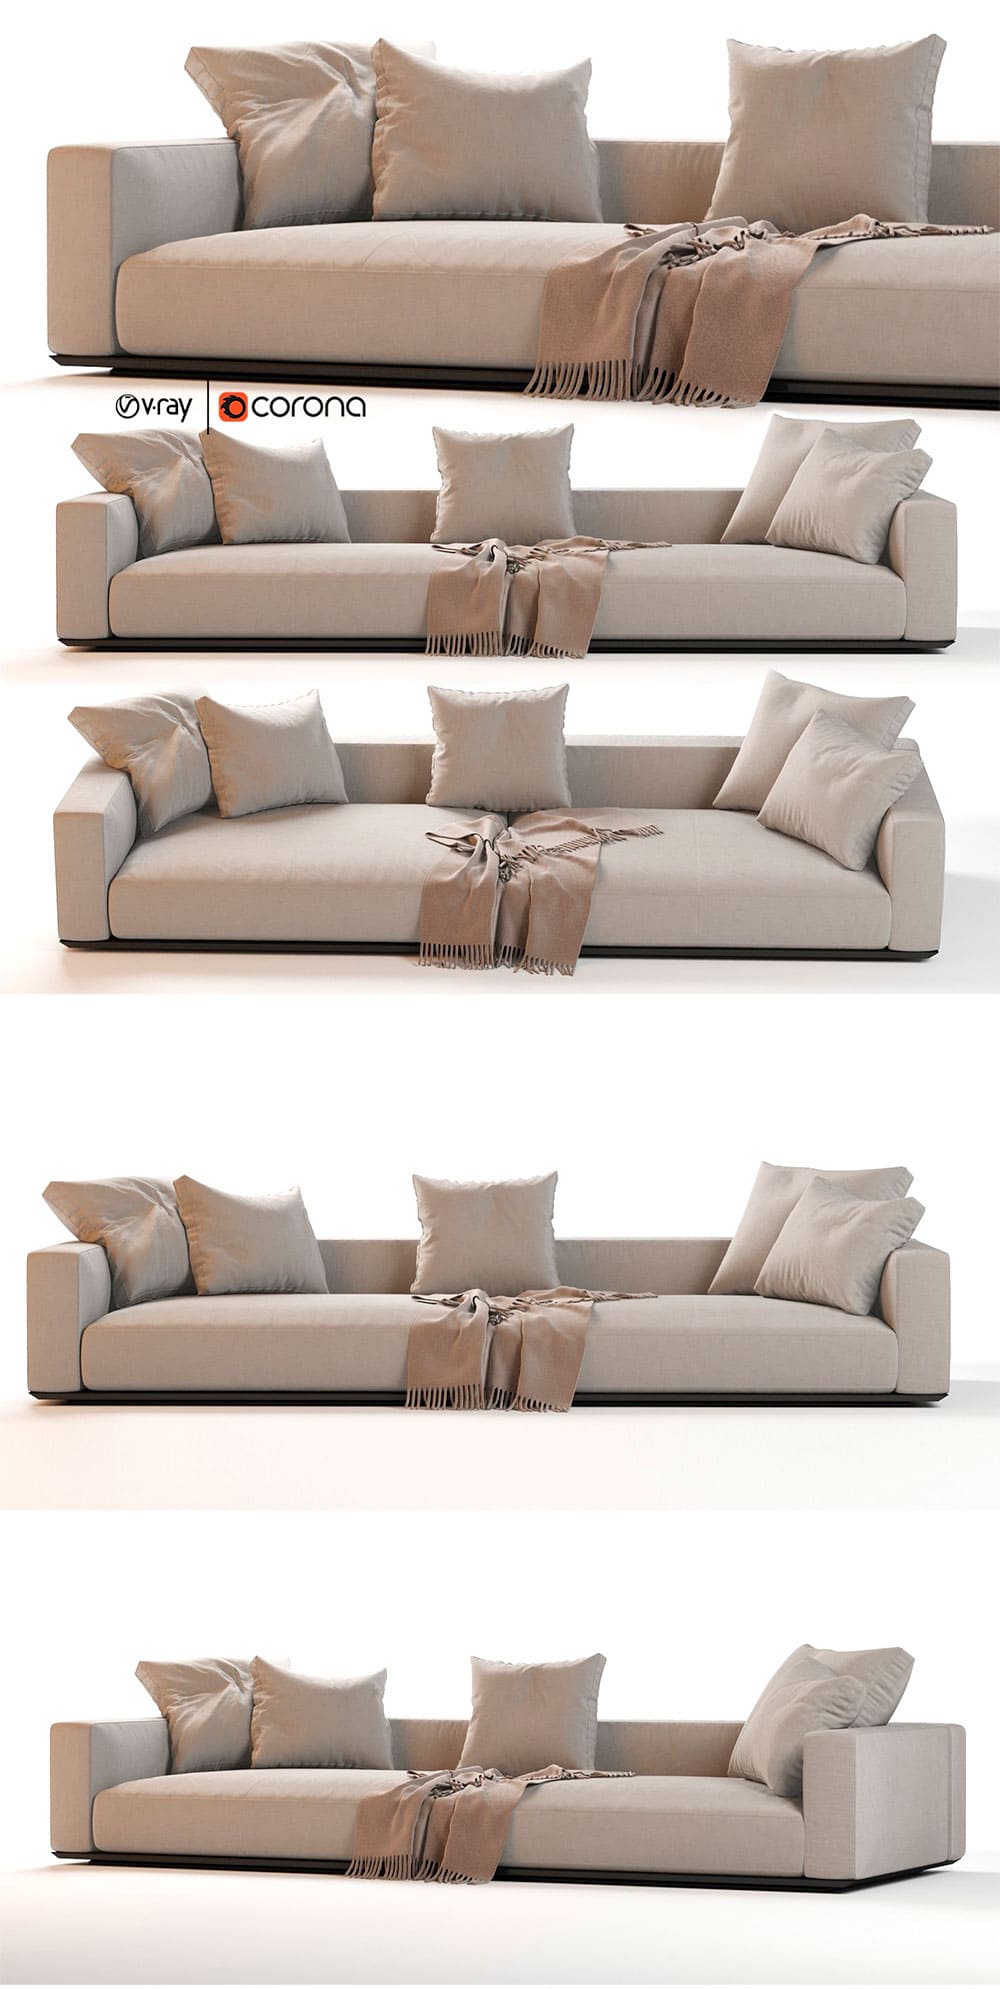 Flexform grandemare sectional sofa, picture for pinterest.